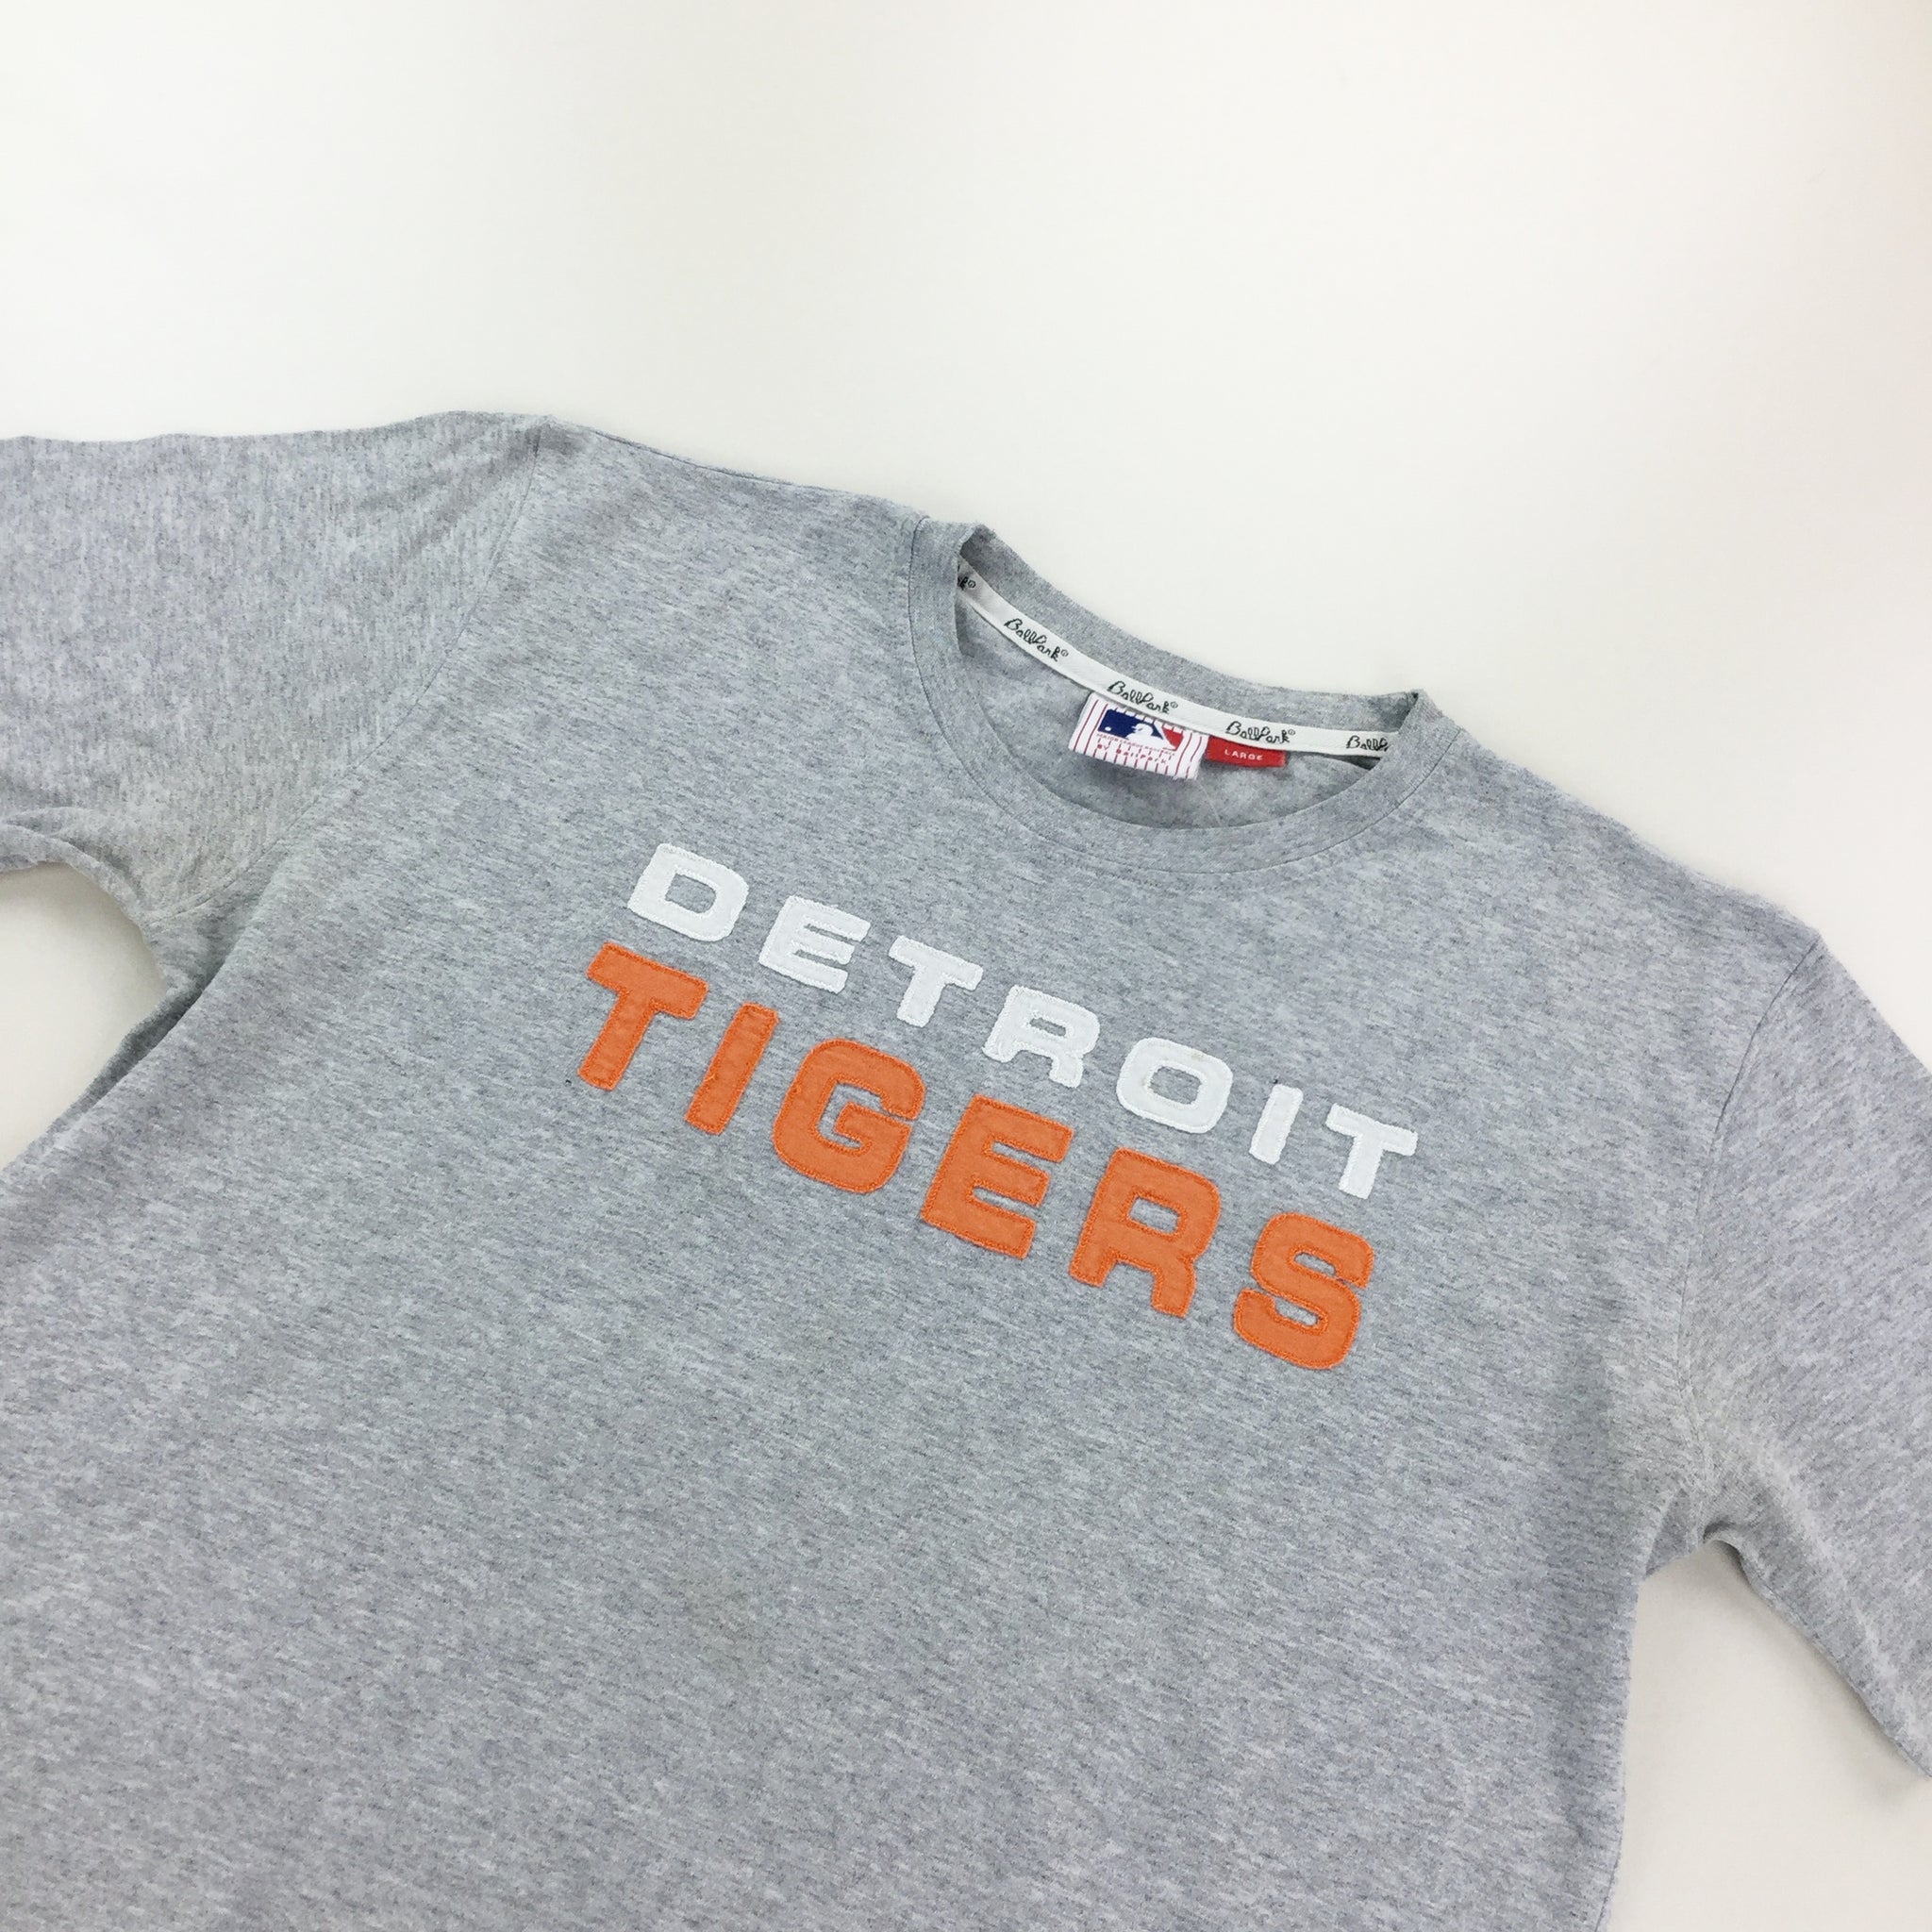 Detroit Tigers Gear, Tigers Merchandise, Tigers Apparel, Store